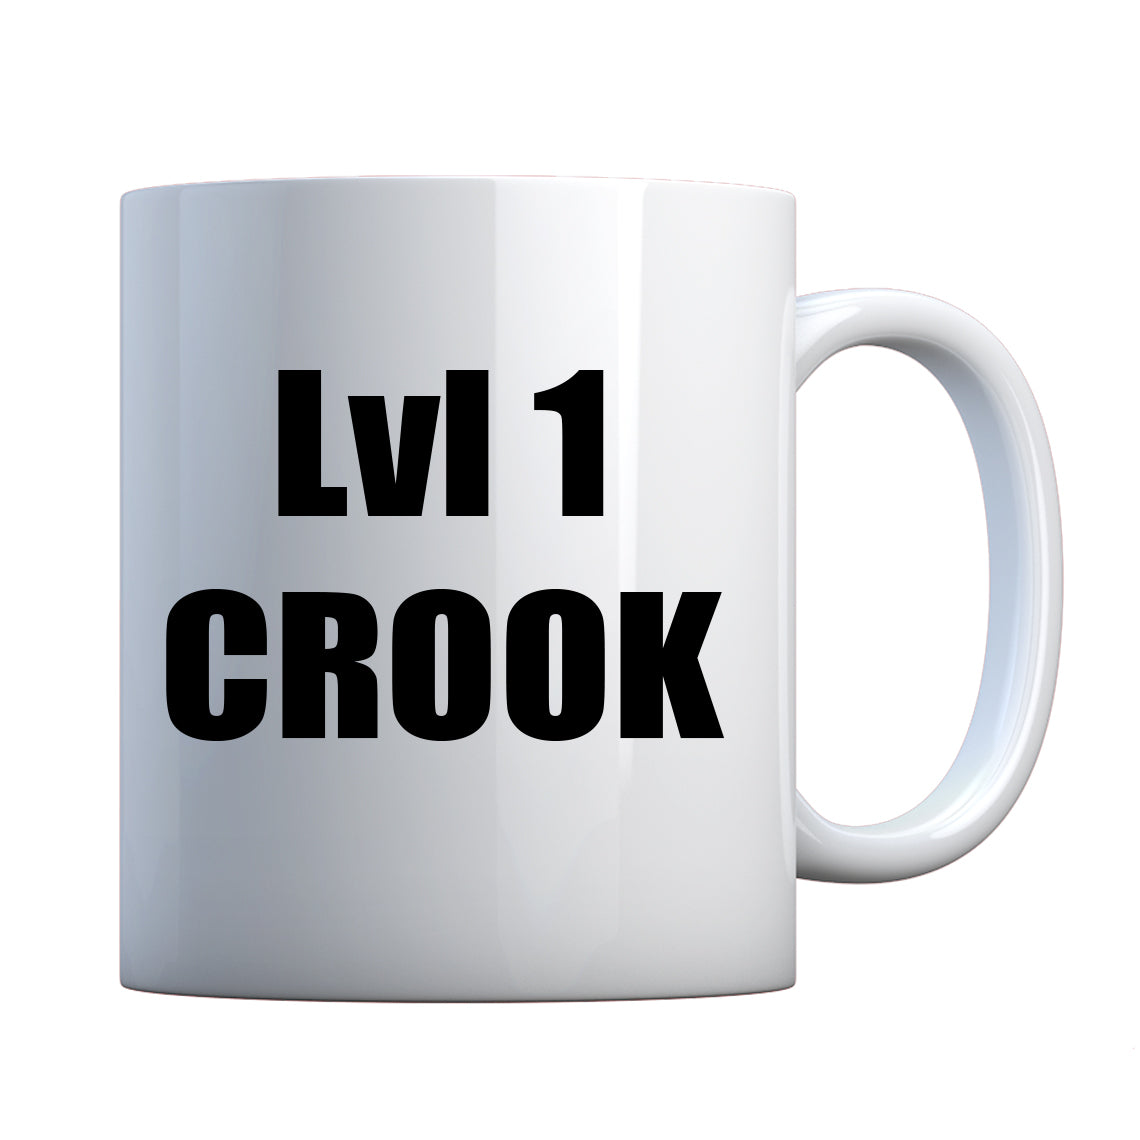 Lvl 1 Crook Ceramic Gift Mug